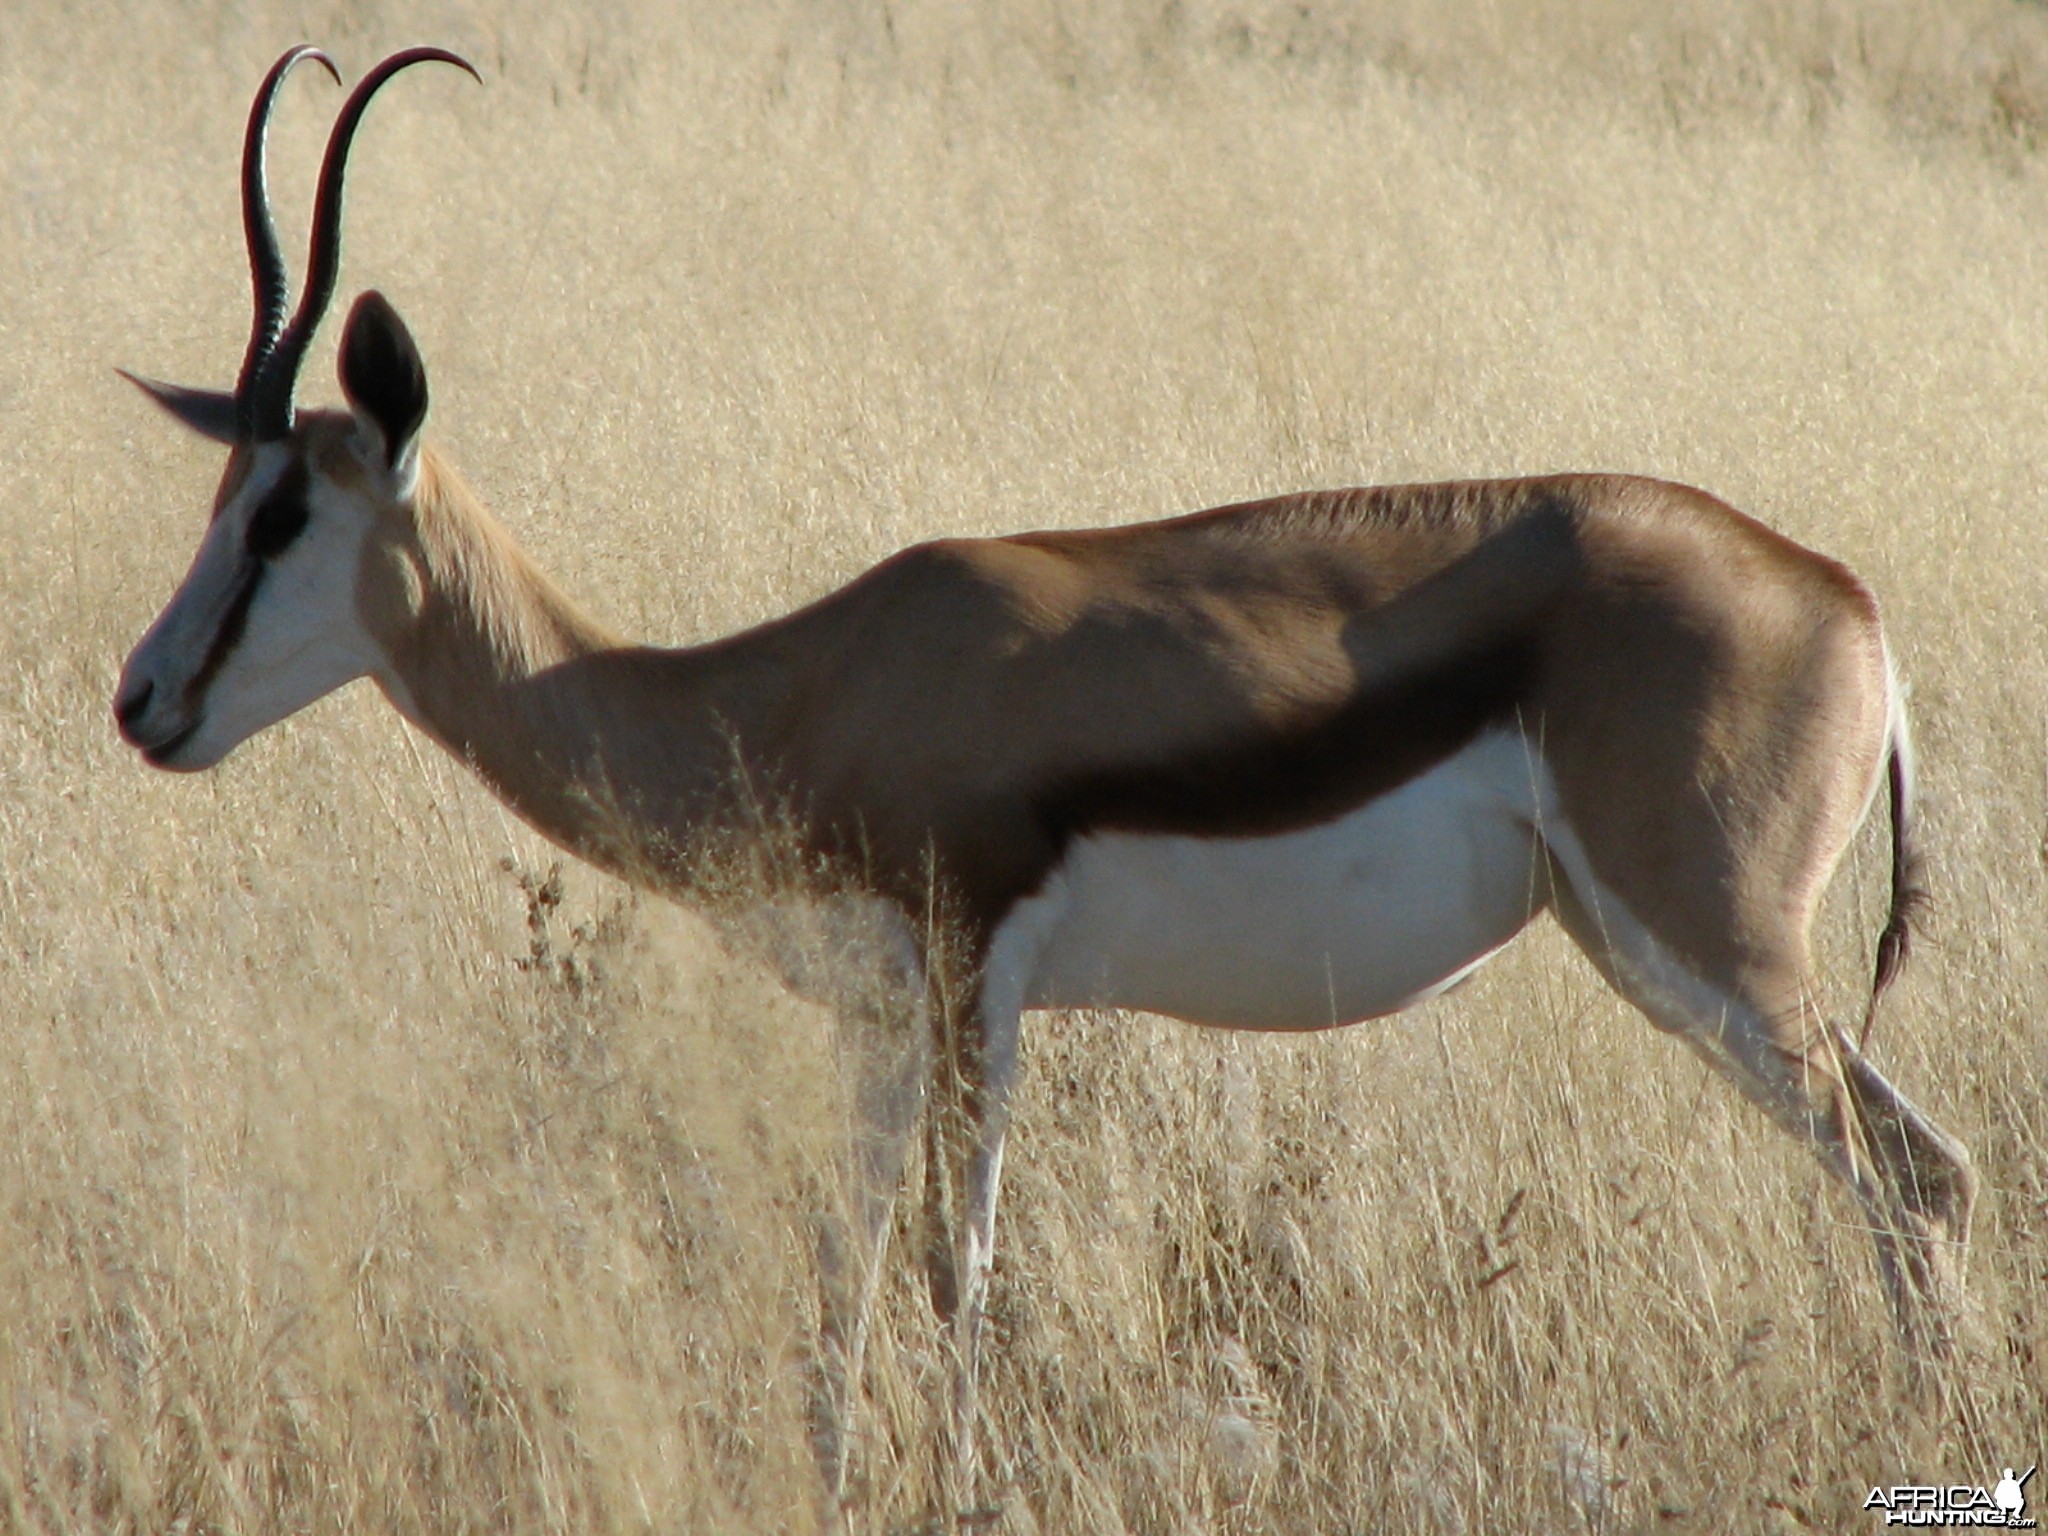 Springbok at Etosha National Park, Namibia